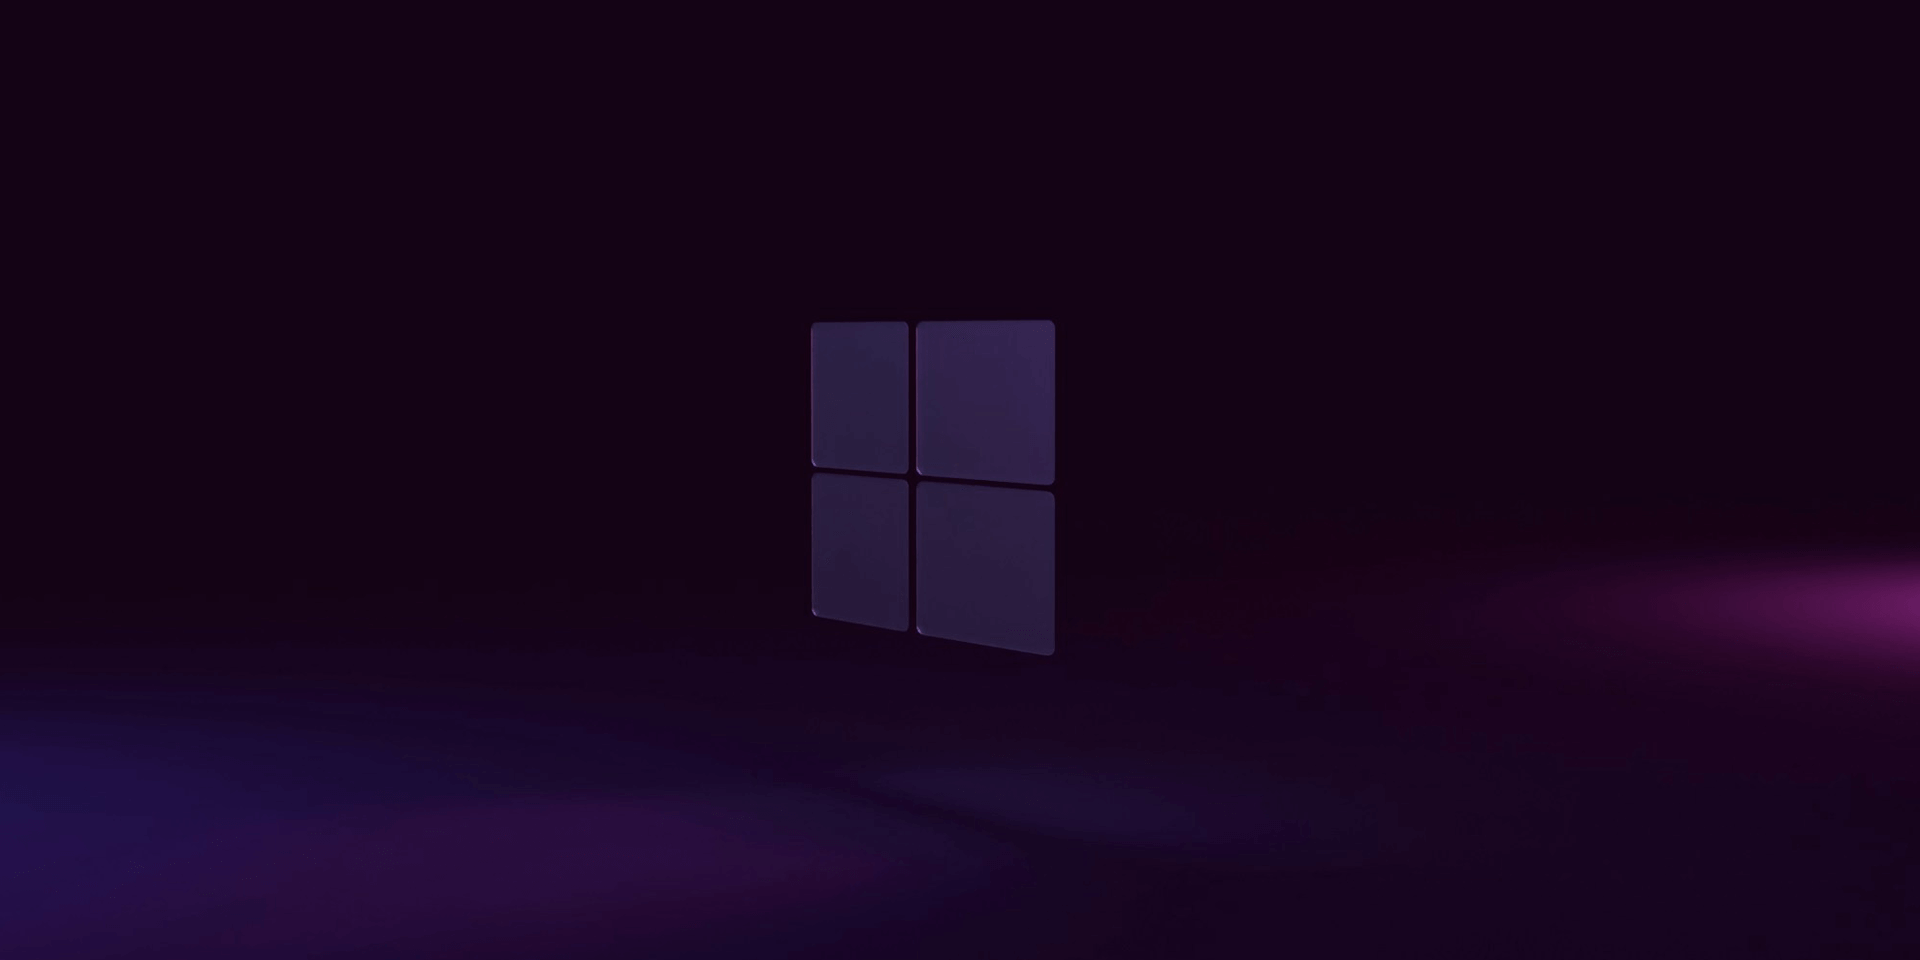 Microsoft Windows logo on dark background.